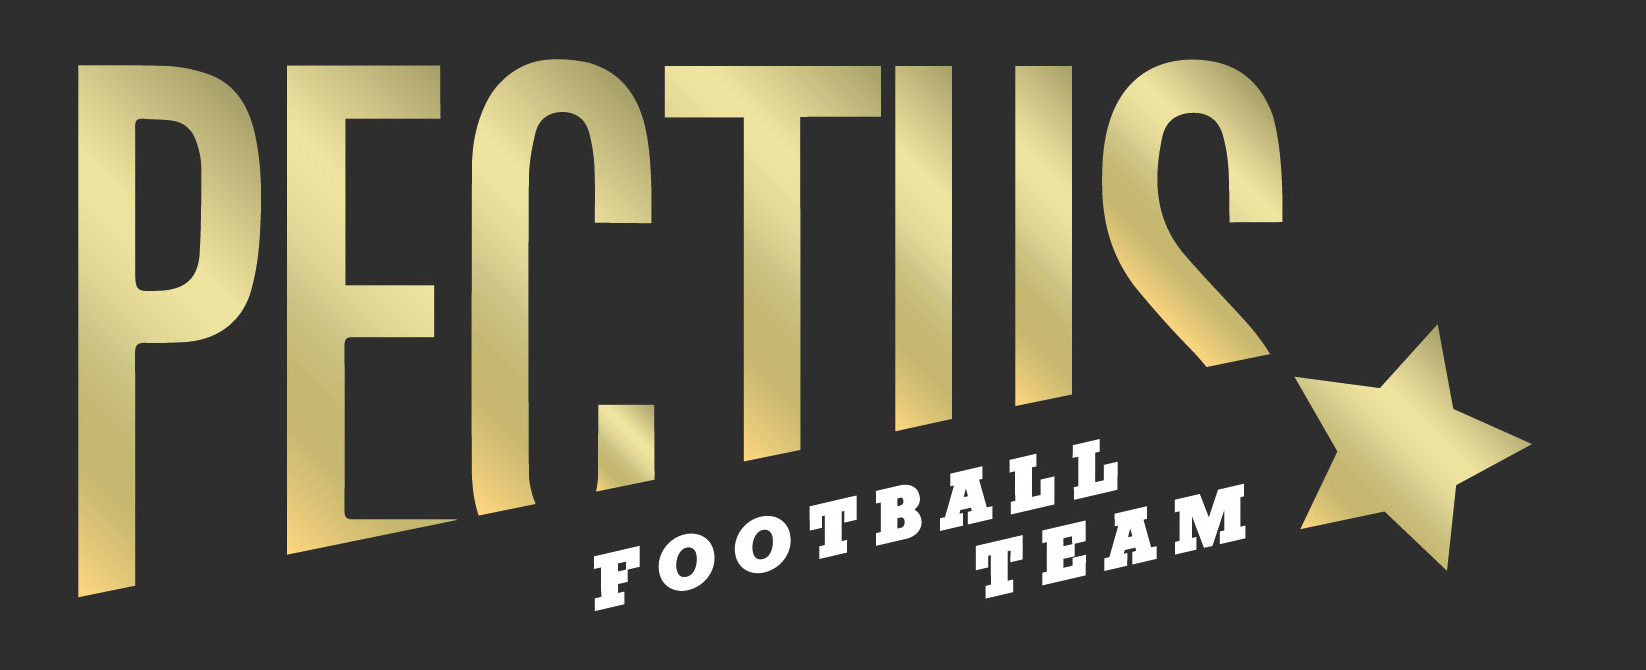 Pectus Football  Team